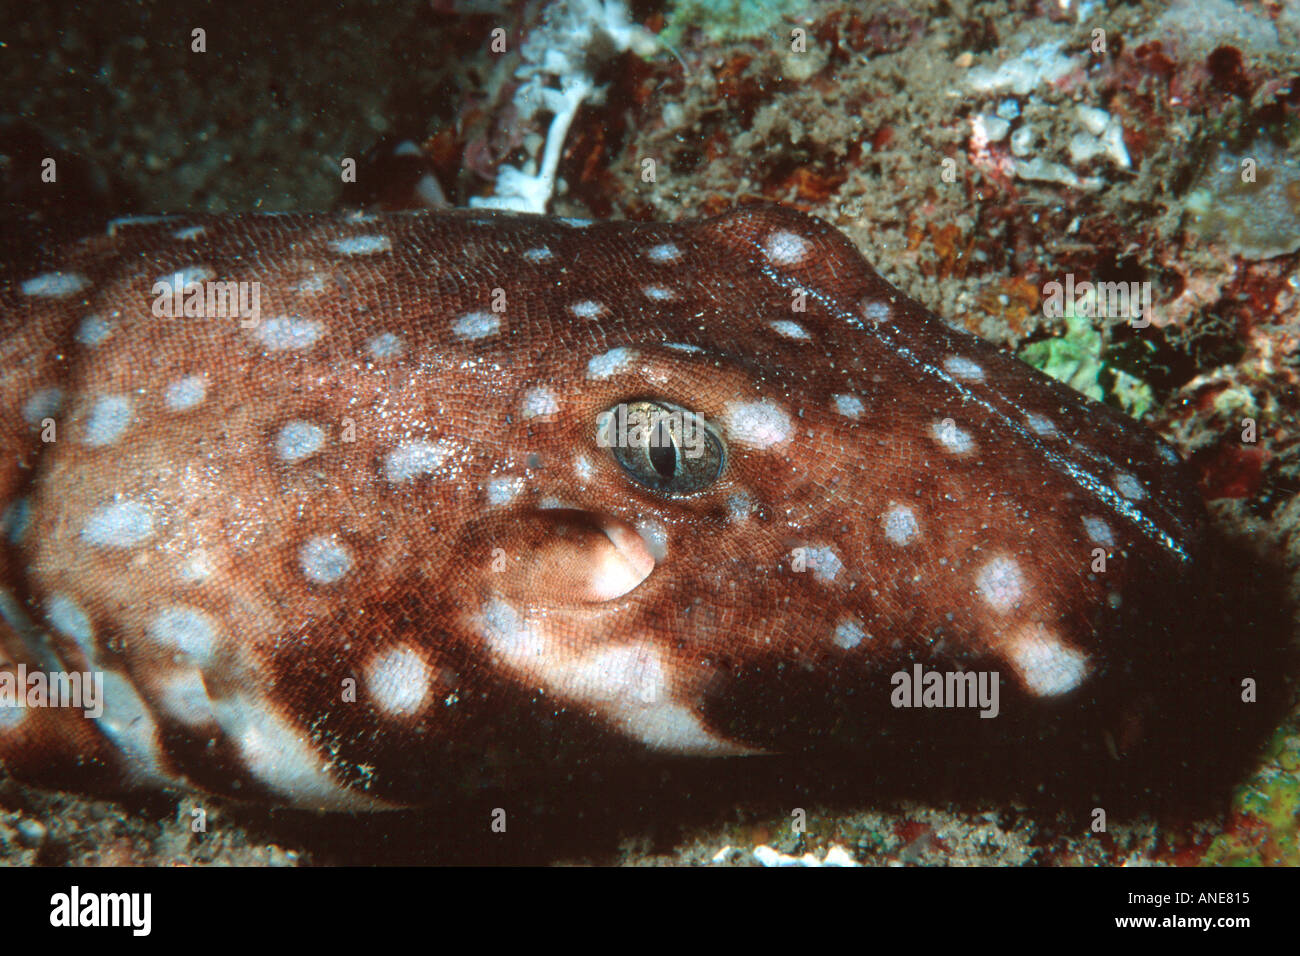 Hooded carpet shark Hemiscyllium strahani Madang Papua New Guinea Solomon Sea South Pacific Stock Photo